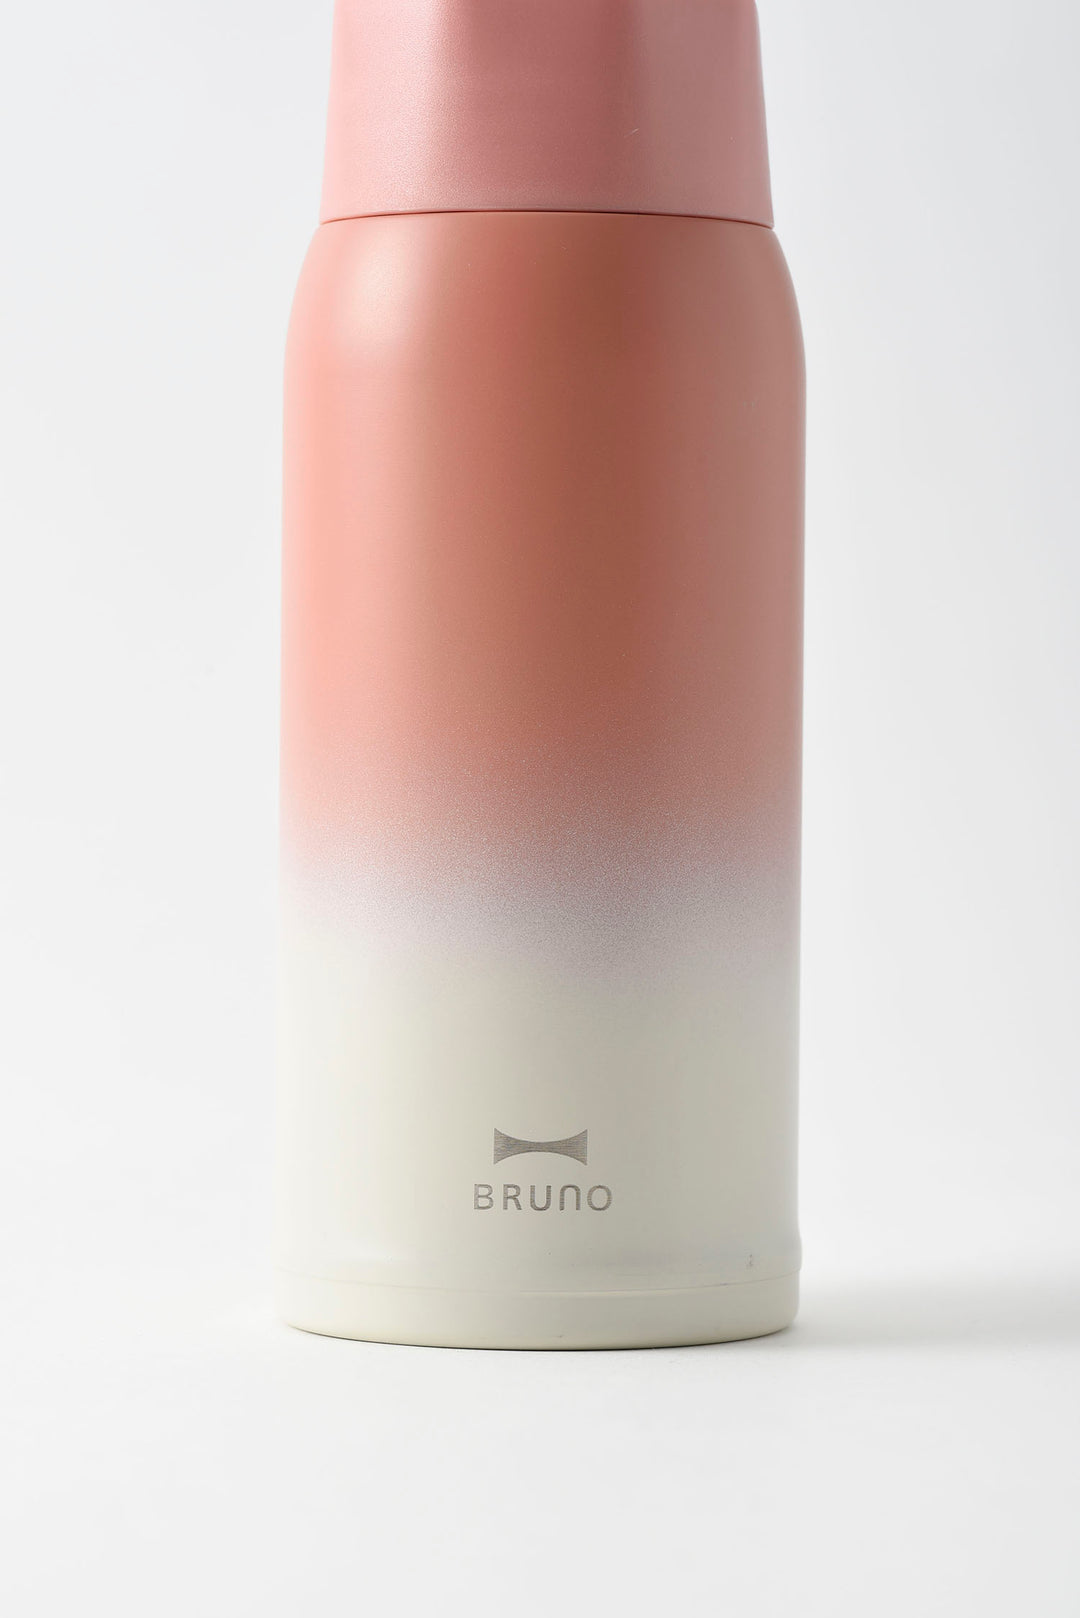 BRUNO Lightweight SS Bottle Medium - 350ml - Magic Hour